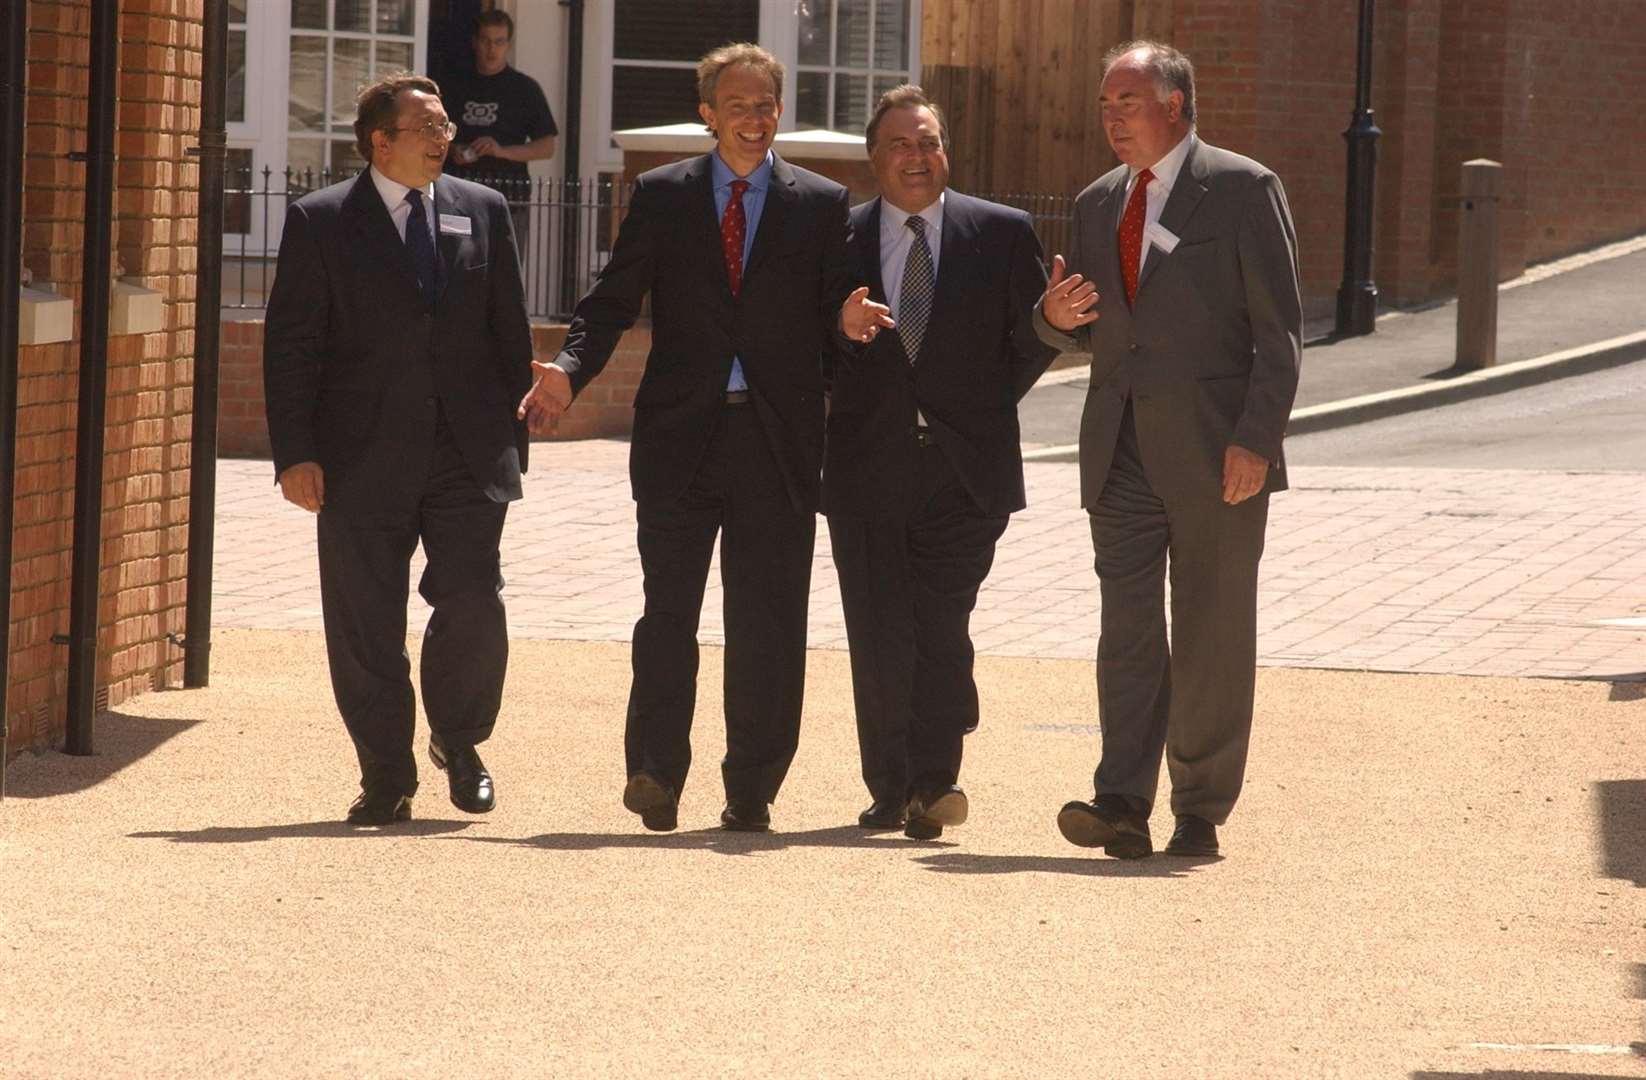 Tony Blair arrives with John Prescott and Gillingham MP Paul Clark